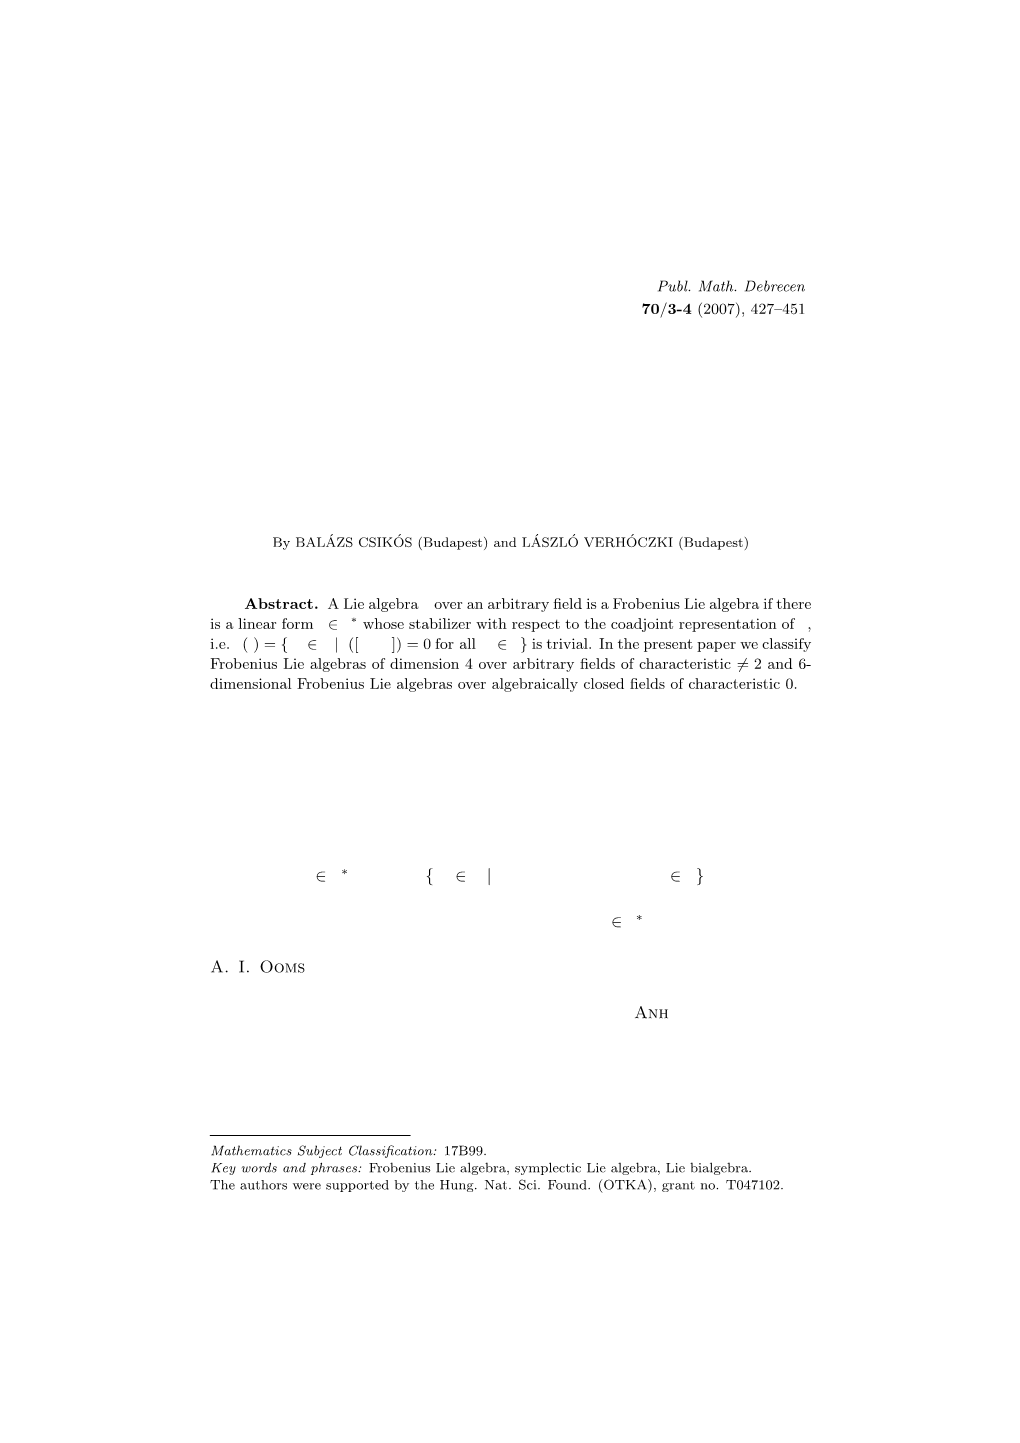 Classification of Frobenius Lie Algebras of Dimension